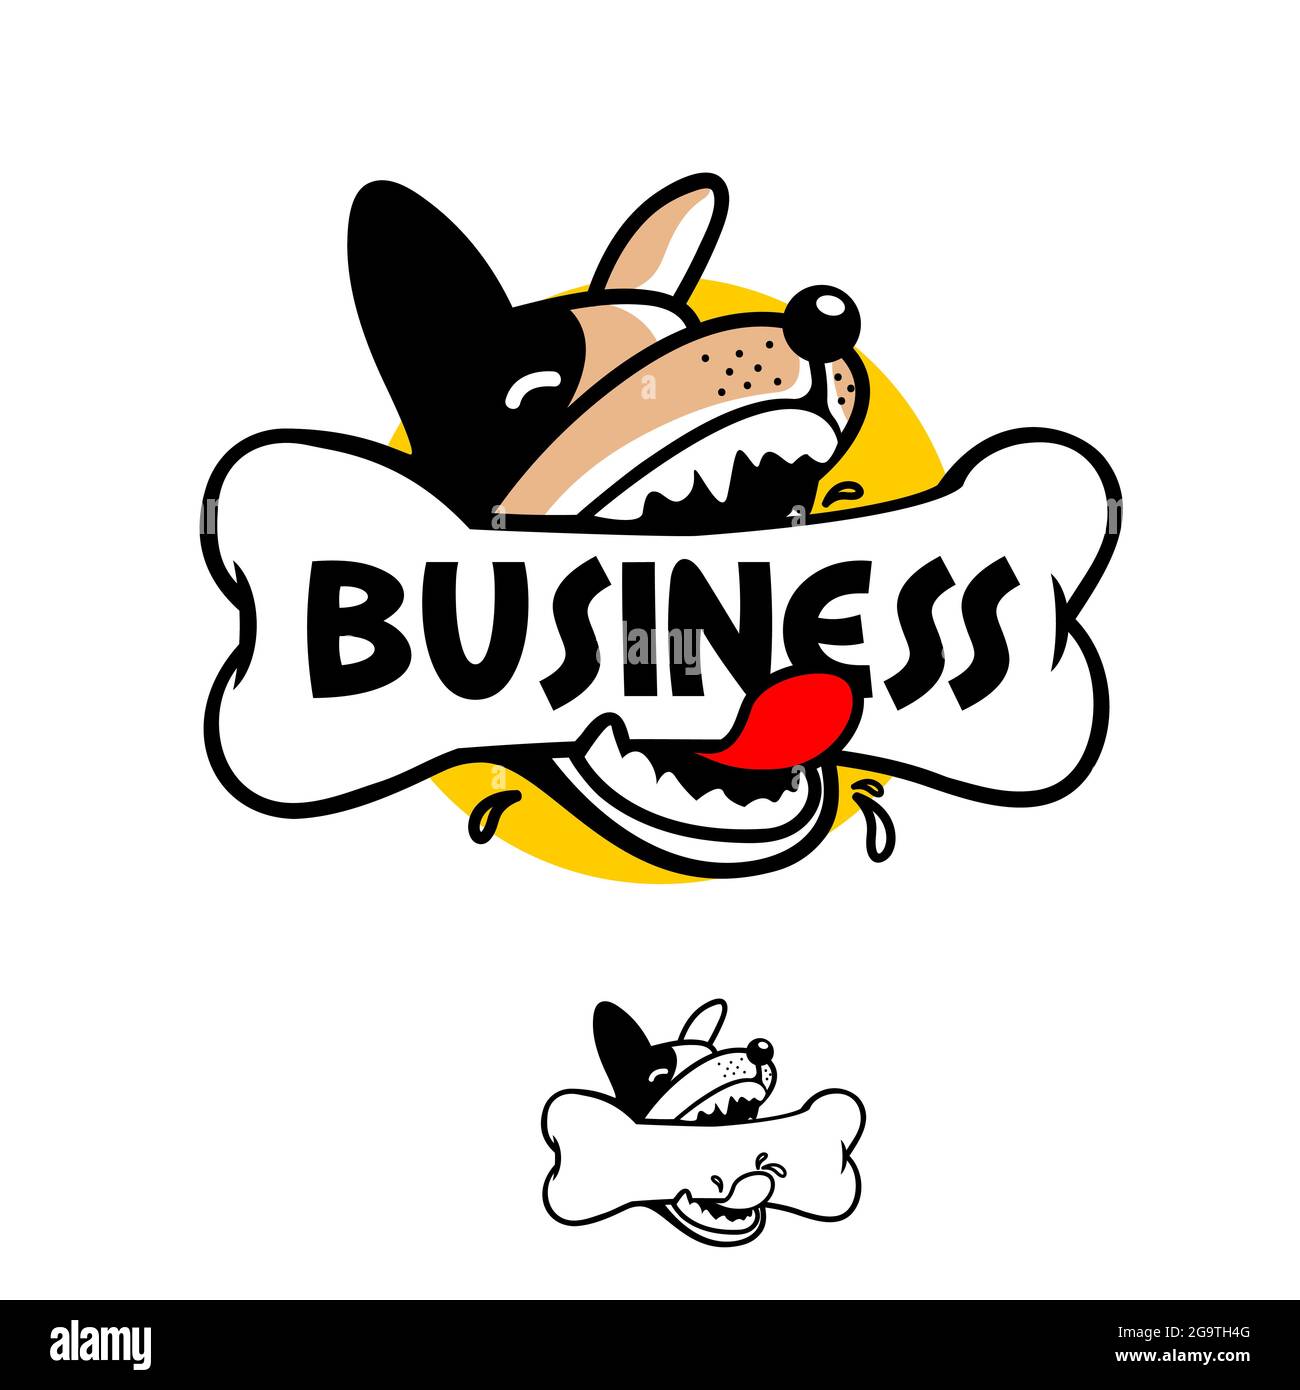 Dog bites bone vector illustration for logo, t-shirt or any other purpose Stock Vector